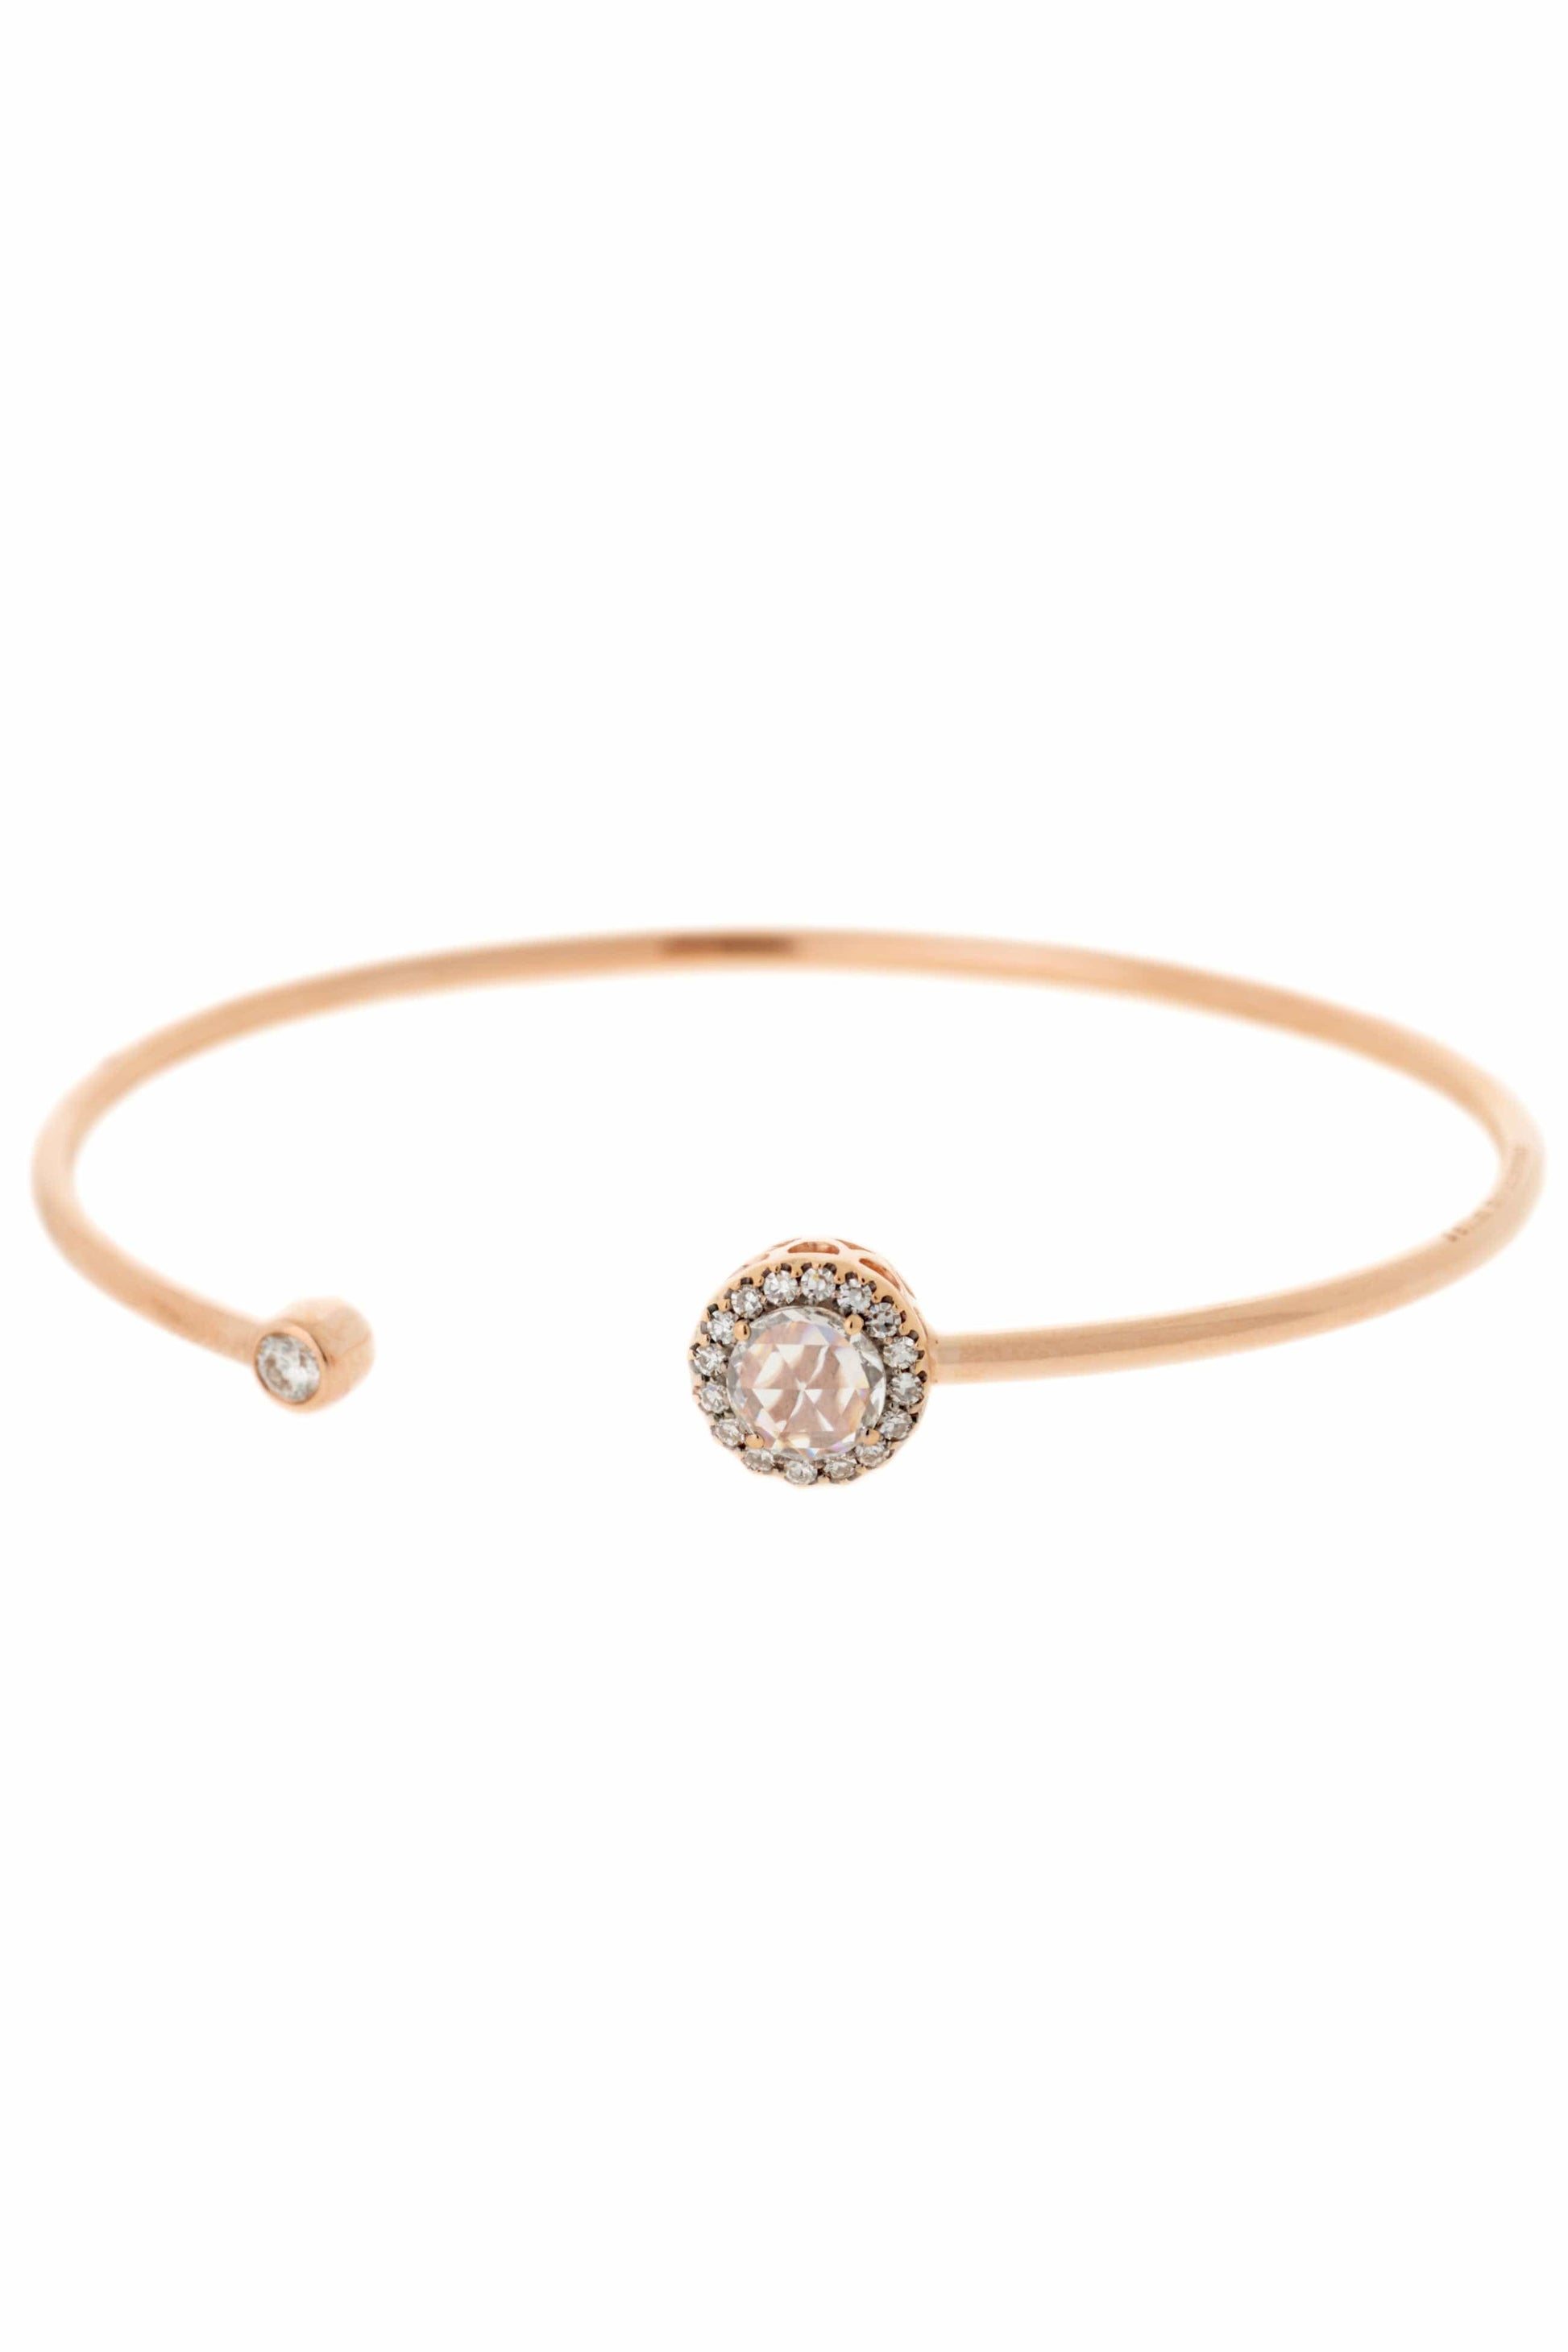 SELIM MOUZANNAR-Beirut Diamond Bracelet-ROSE GOLD